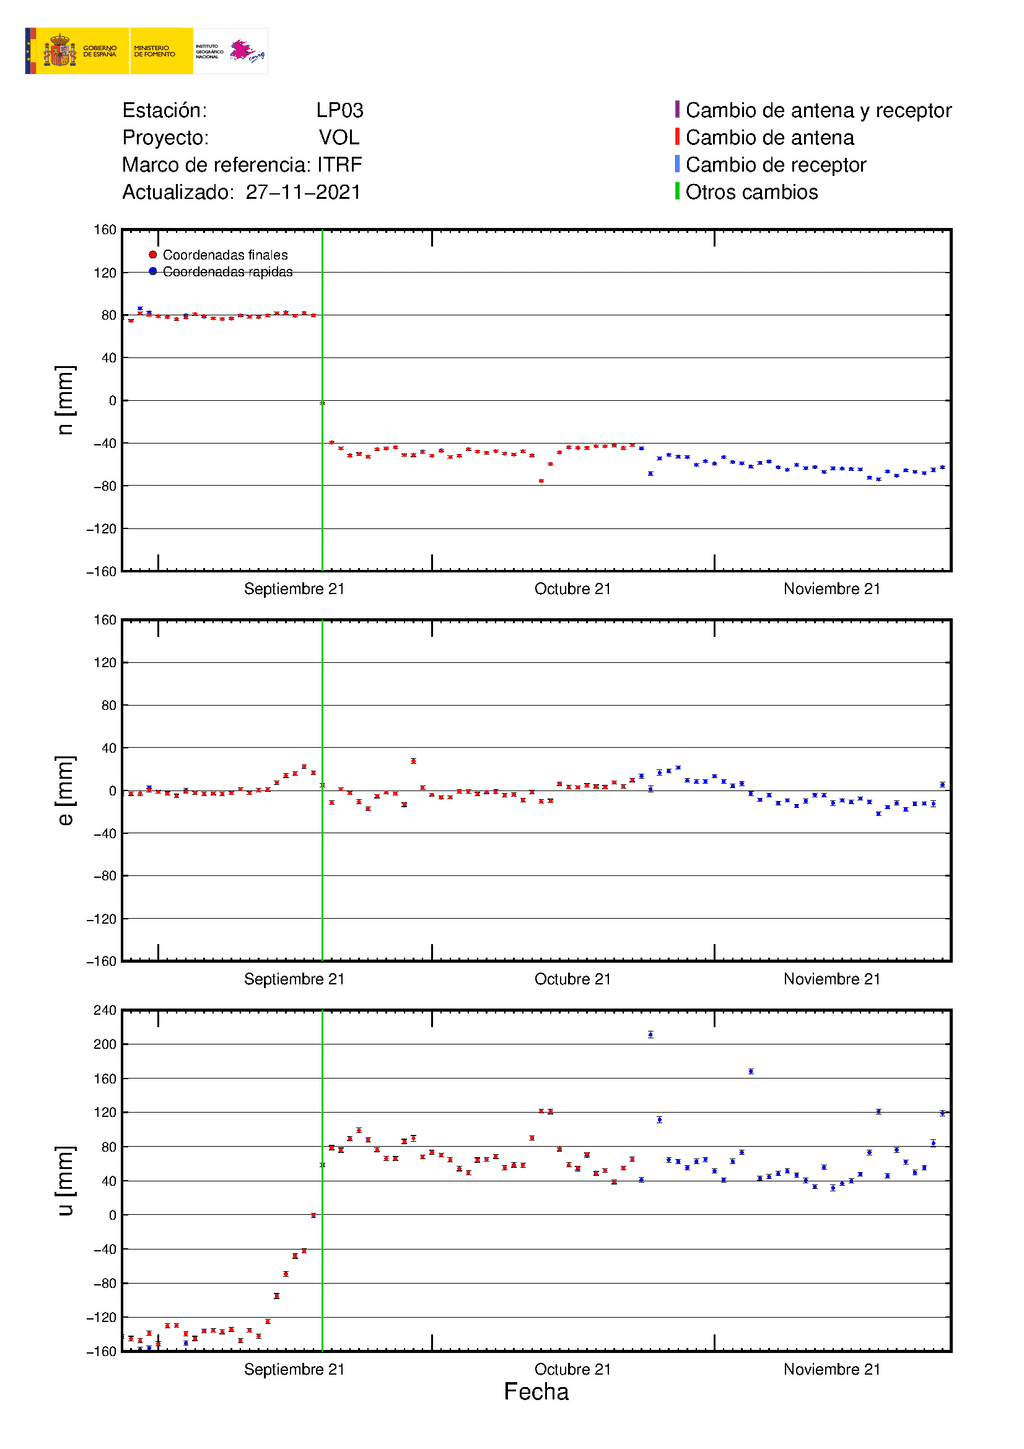 Ground deformation at LP03 station past 7 days (image: IGN)